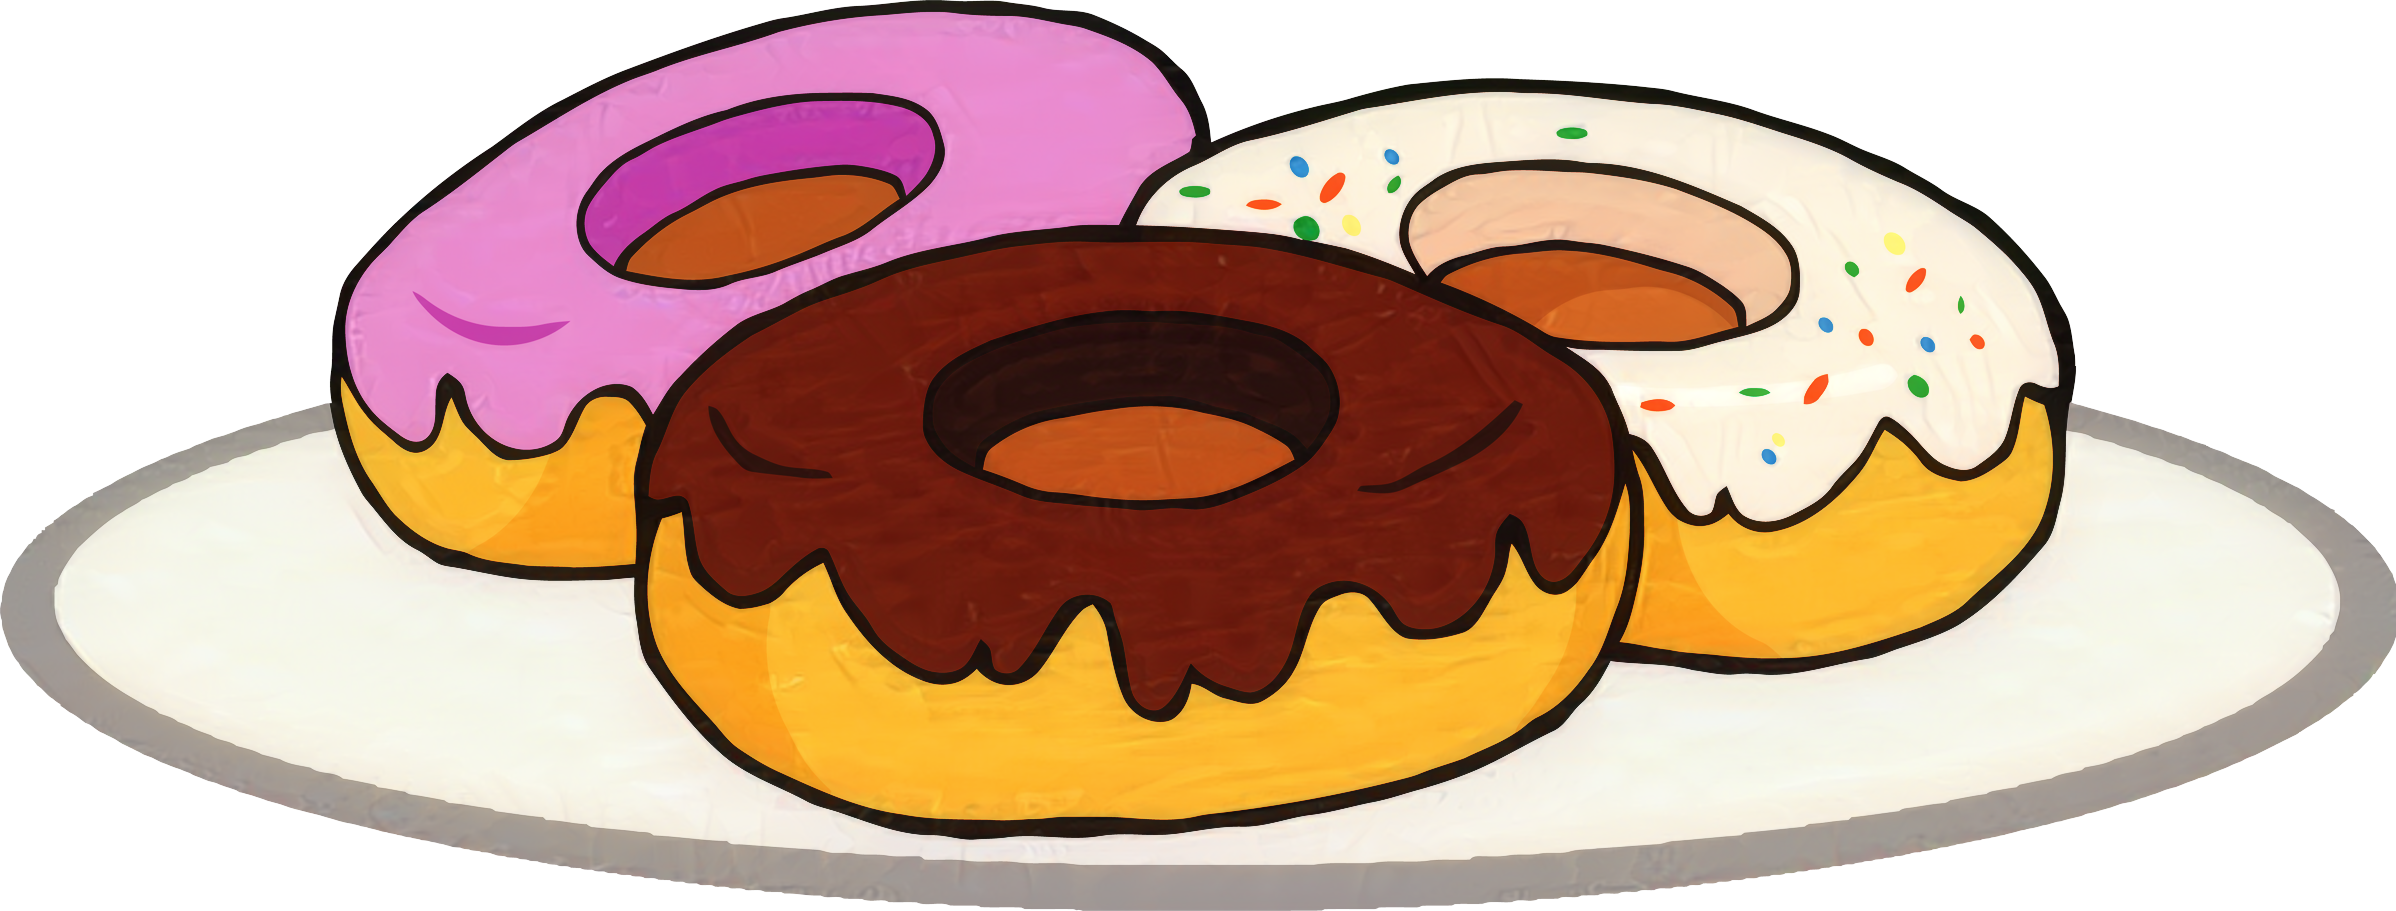 donut clipart vector